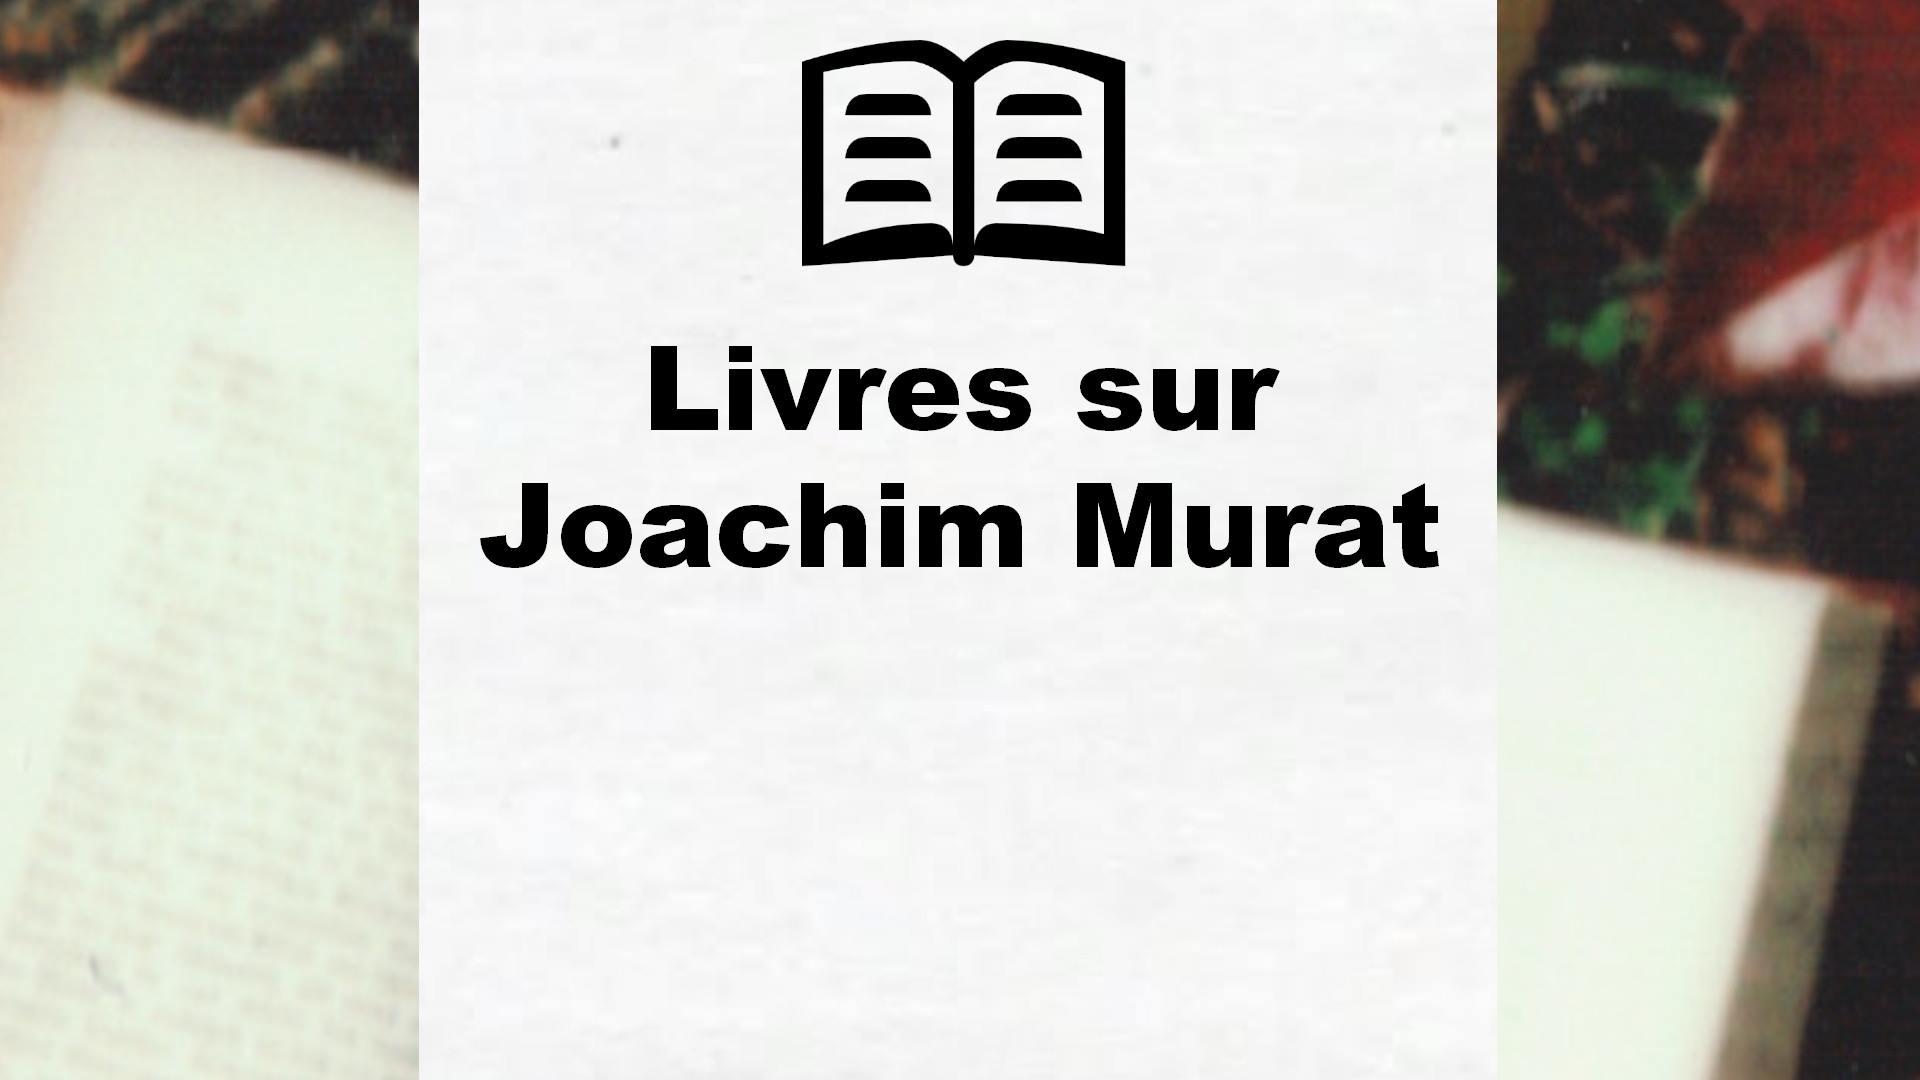 Livres sur Joachim Murat